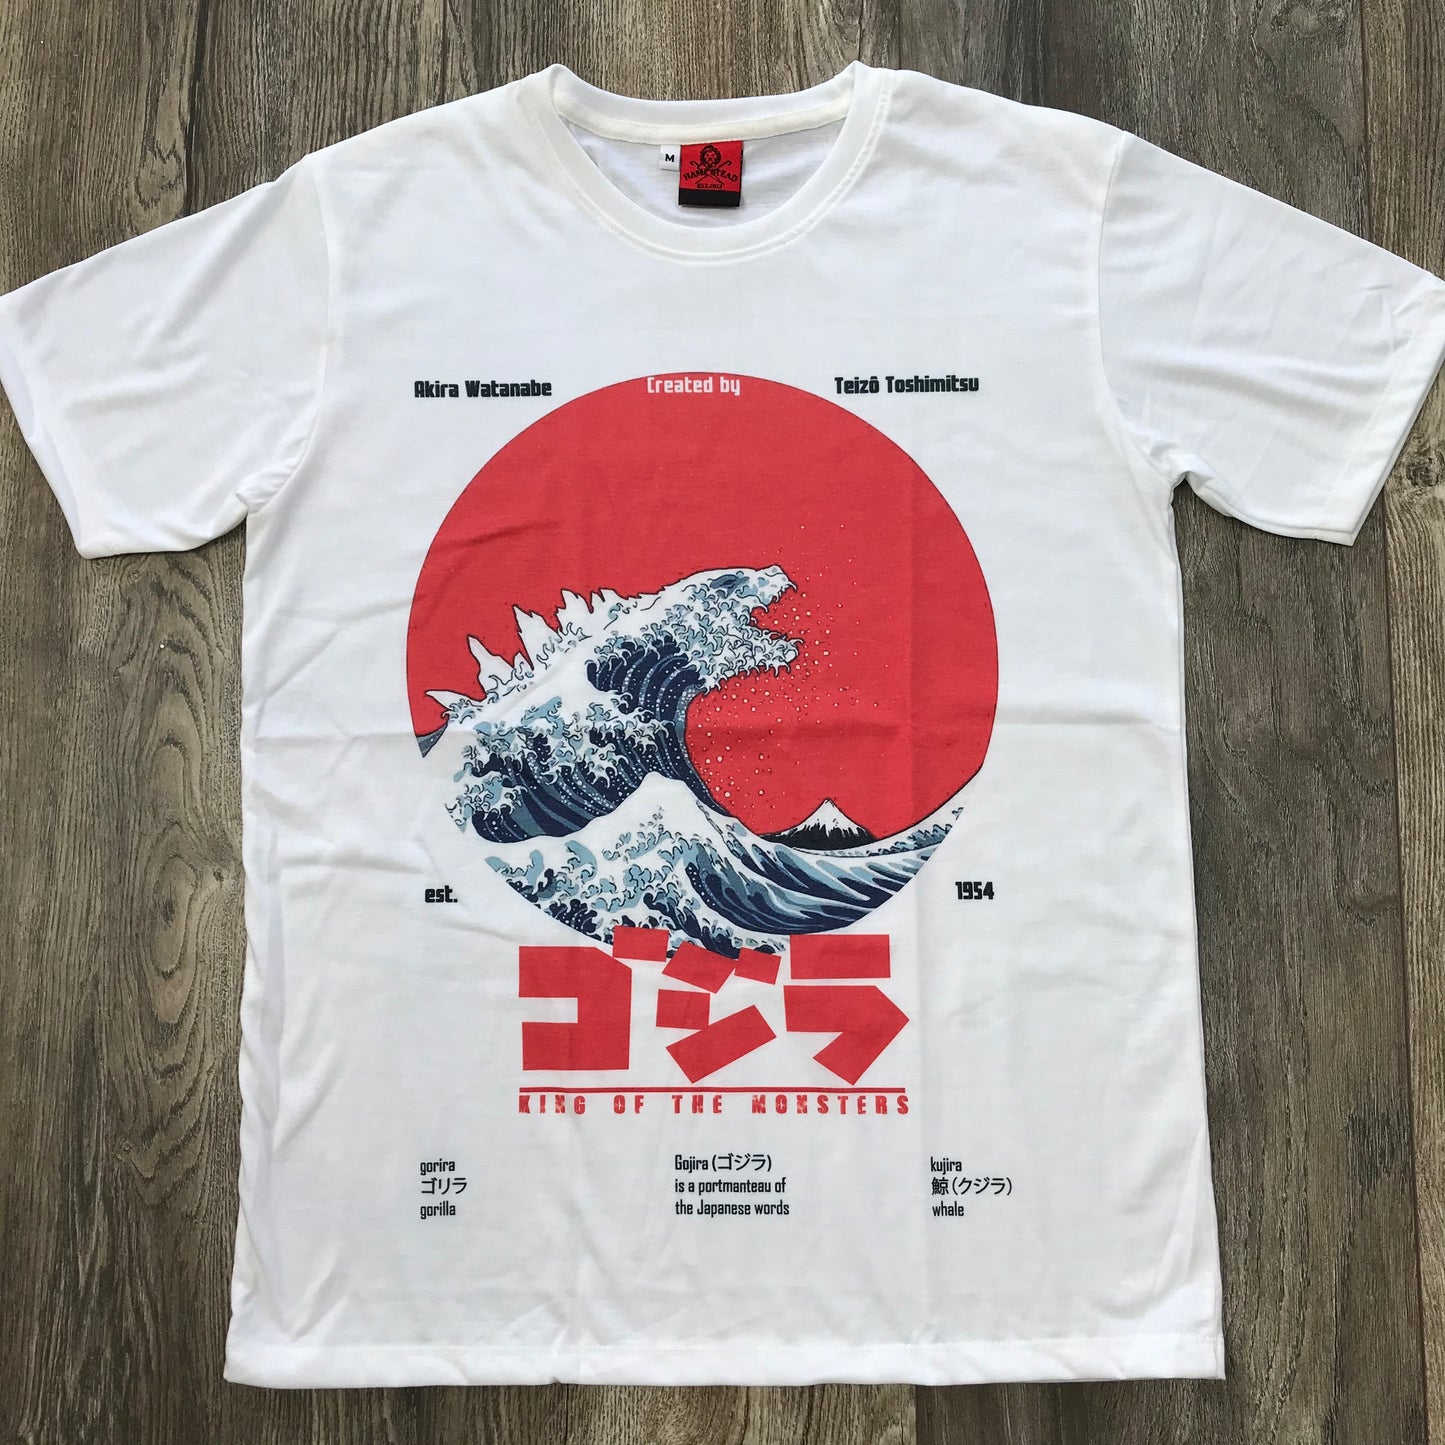 Godzilla / kanagawa / the great wave